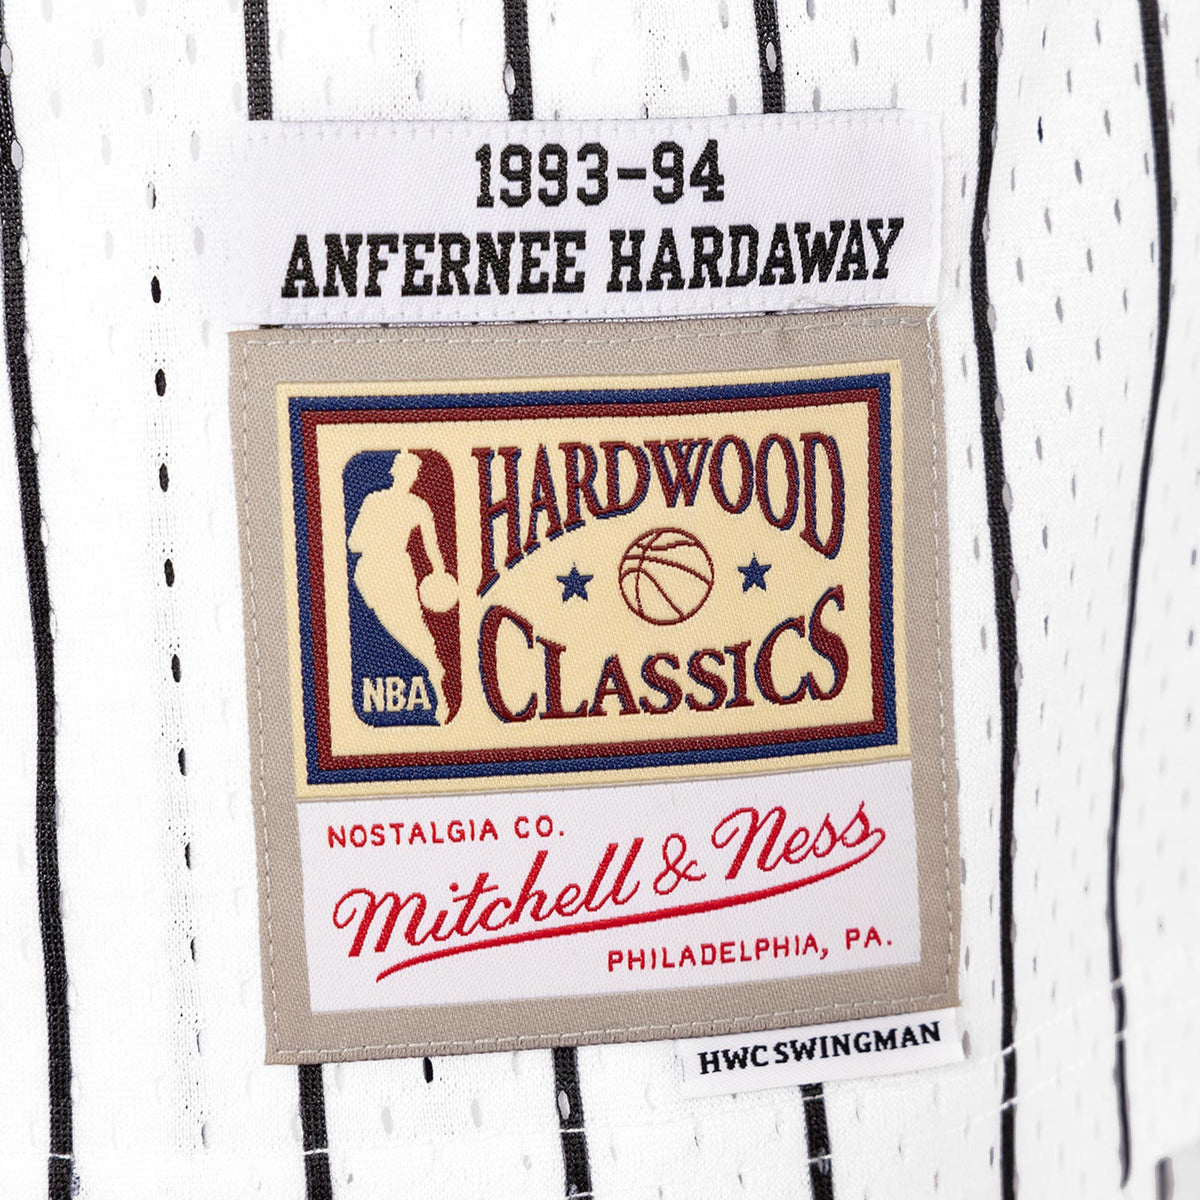 Buy NBA ORLANDO MAGIC 1993 OFF WHITE SWINGMAN JERSEY PENNY HARDAWAY for EUR  99.90 on !